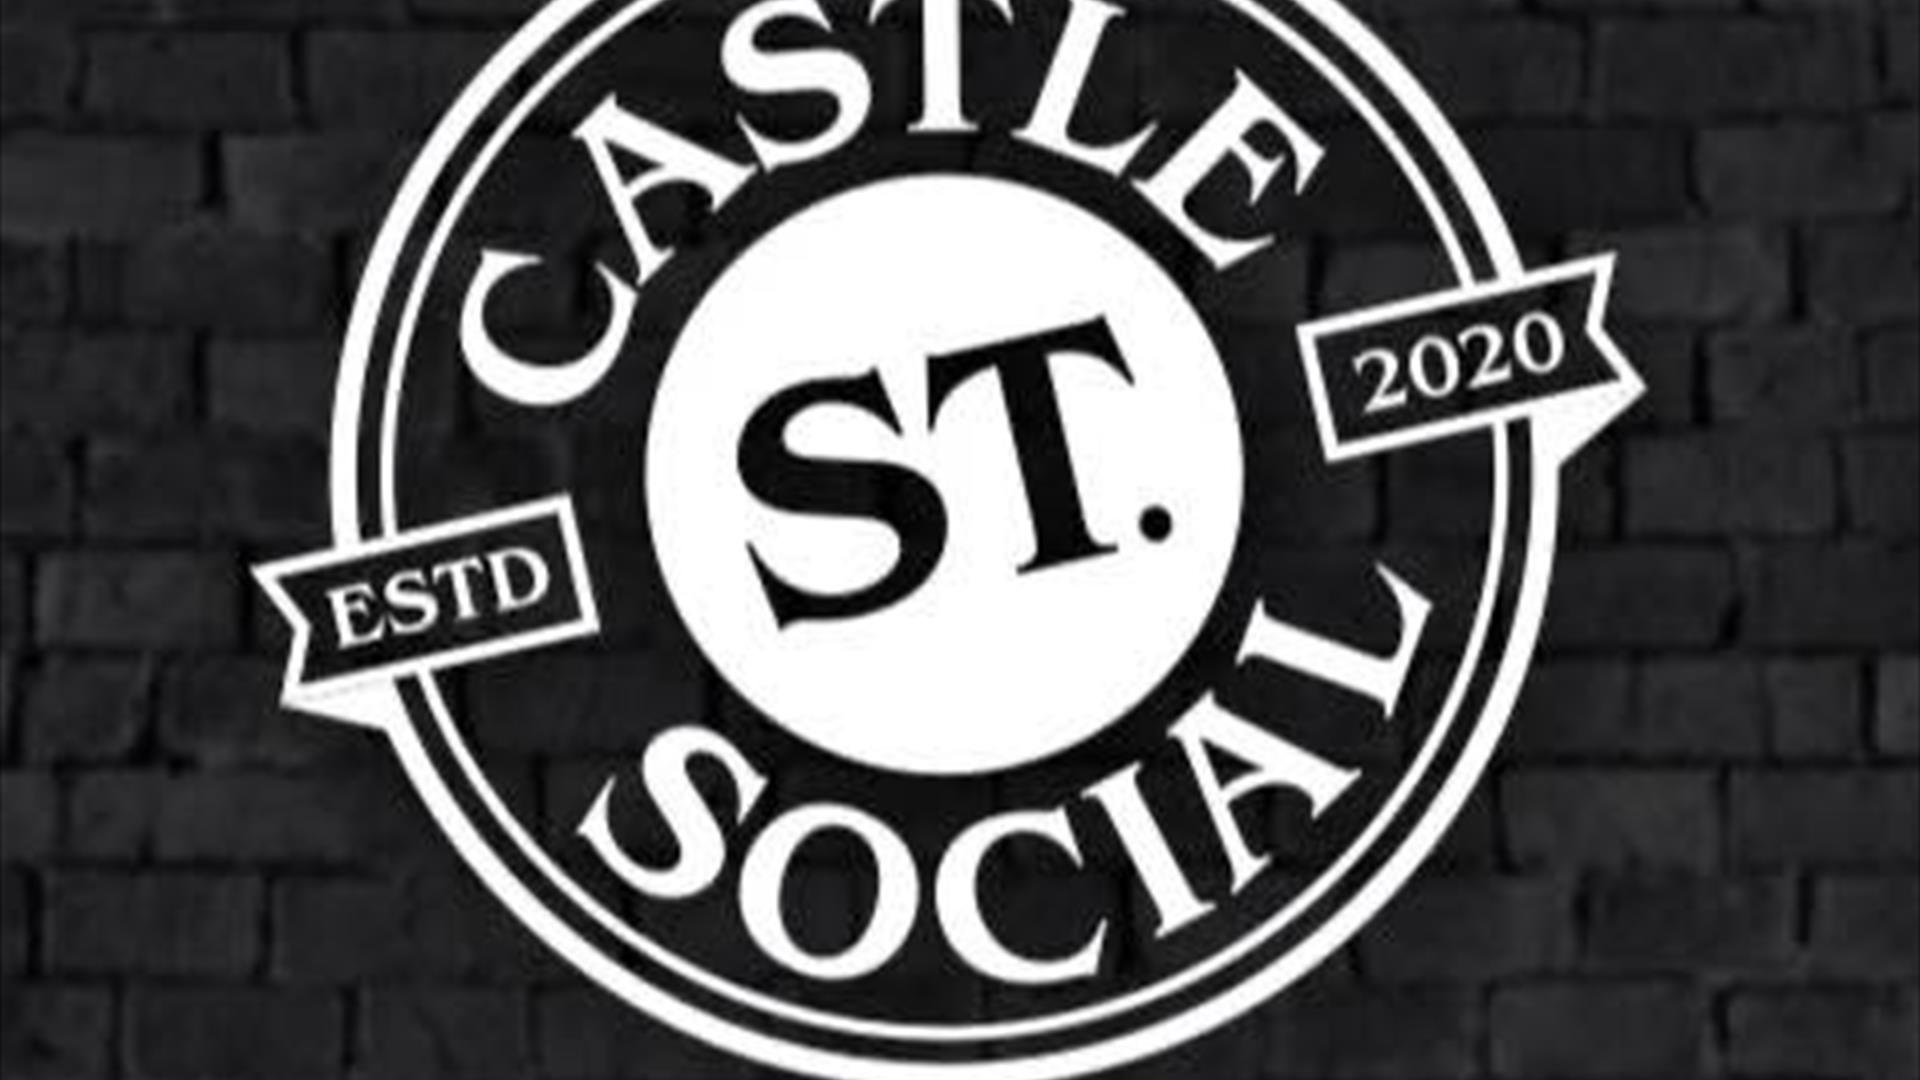 Castle Street Social